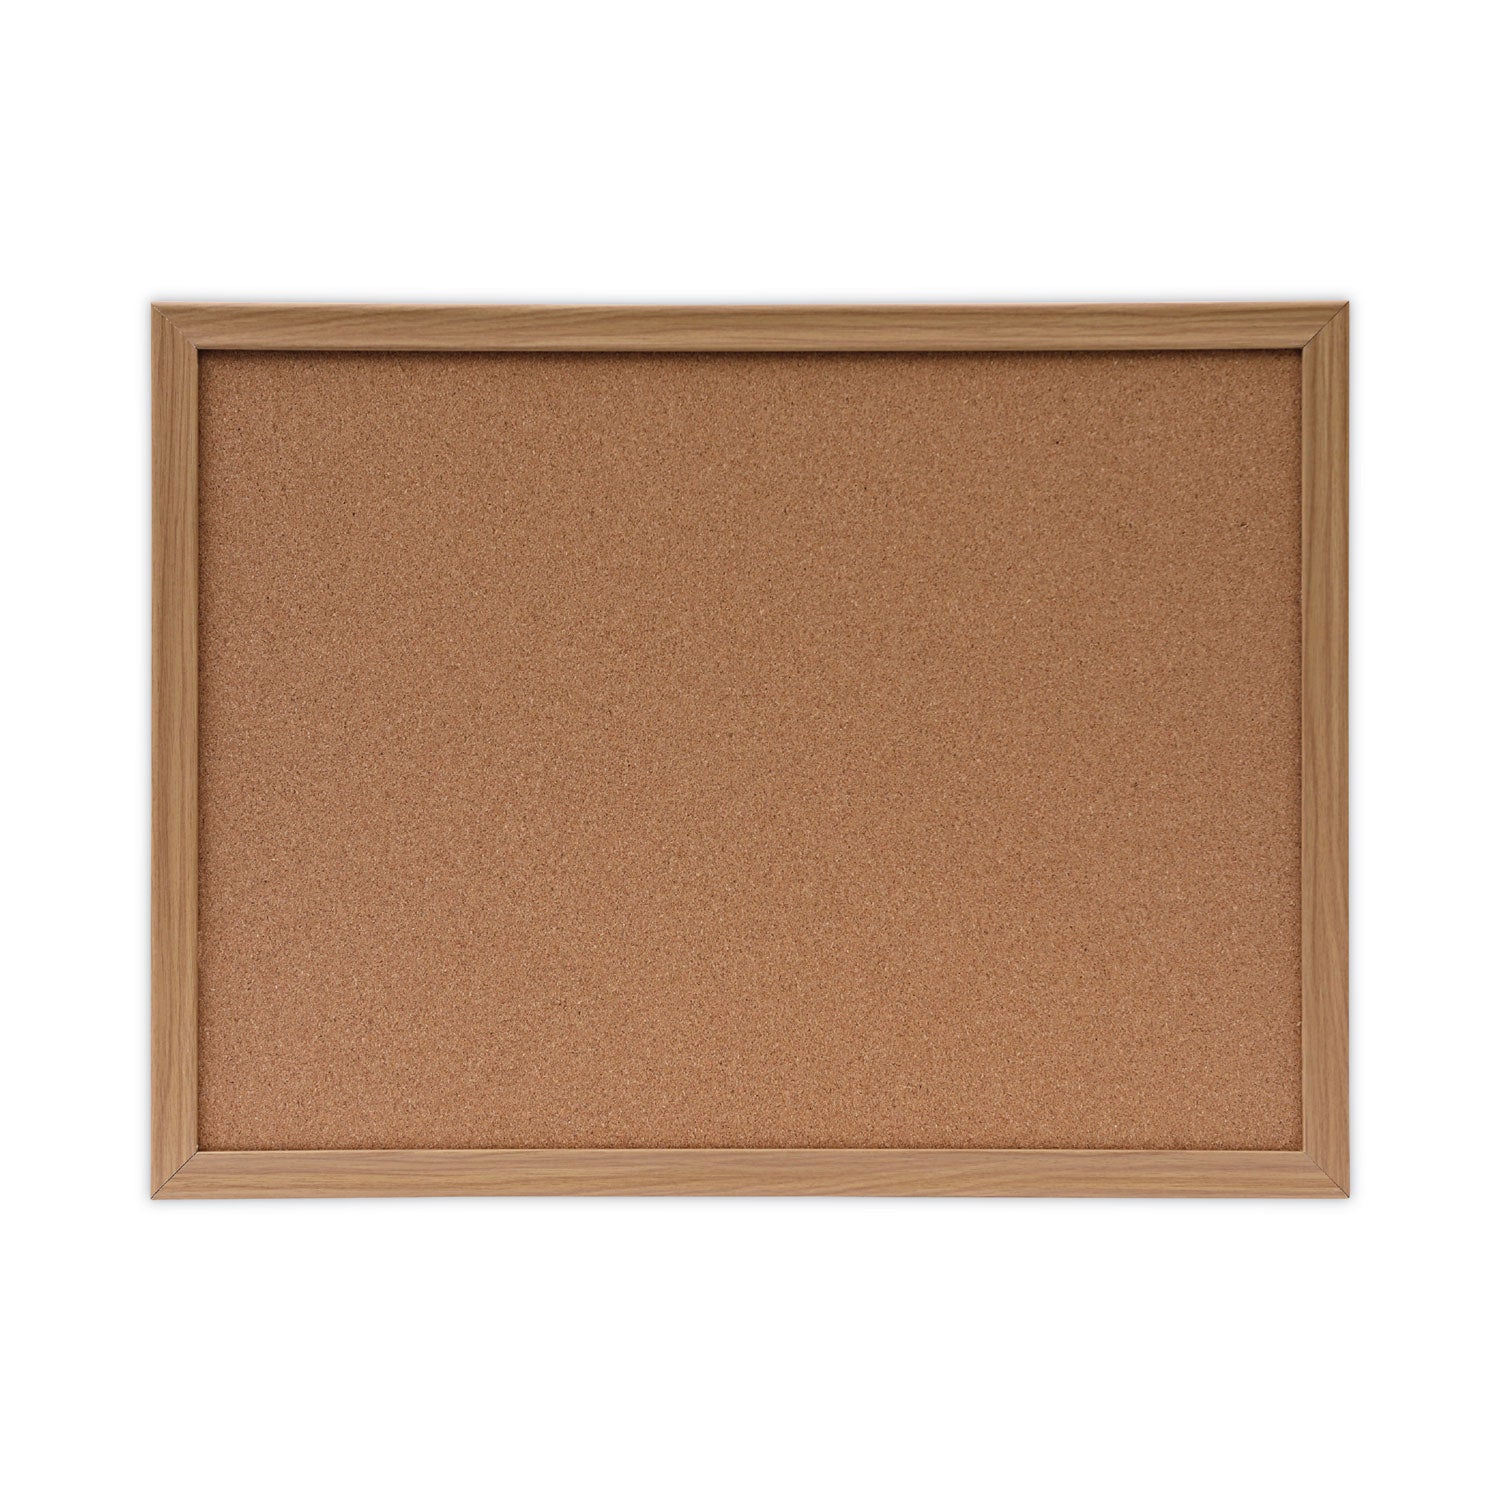 Cork Board with Oak Style Frame, 24 x 18, Tan Surface - 